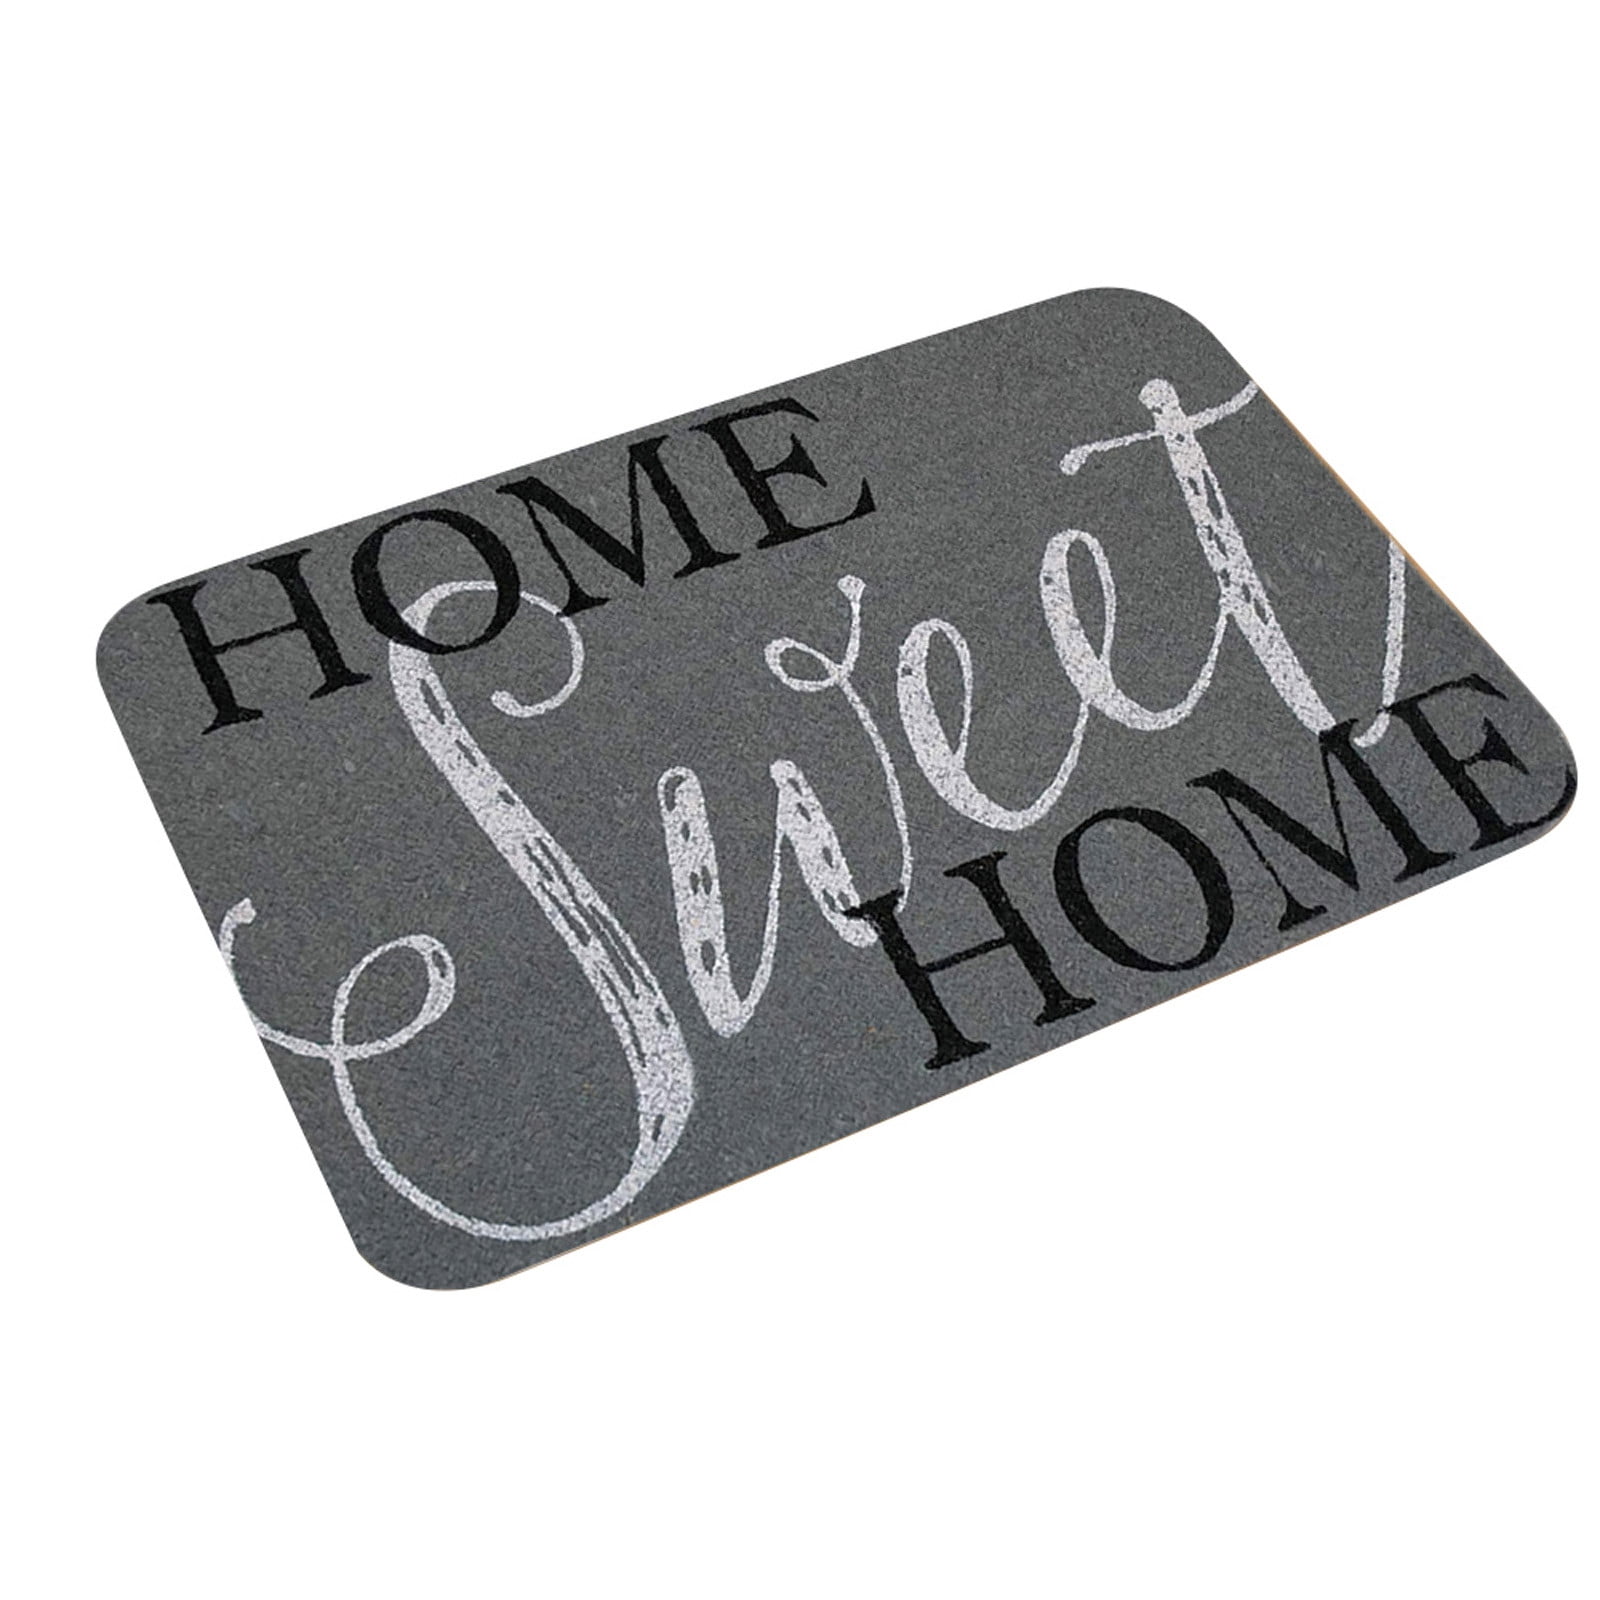 Abbott Collection 35-PFW/SH 1151 Home Plate Doormat 